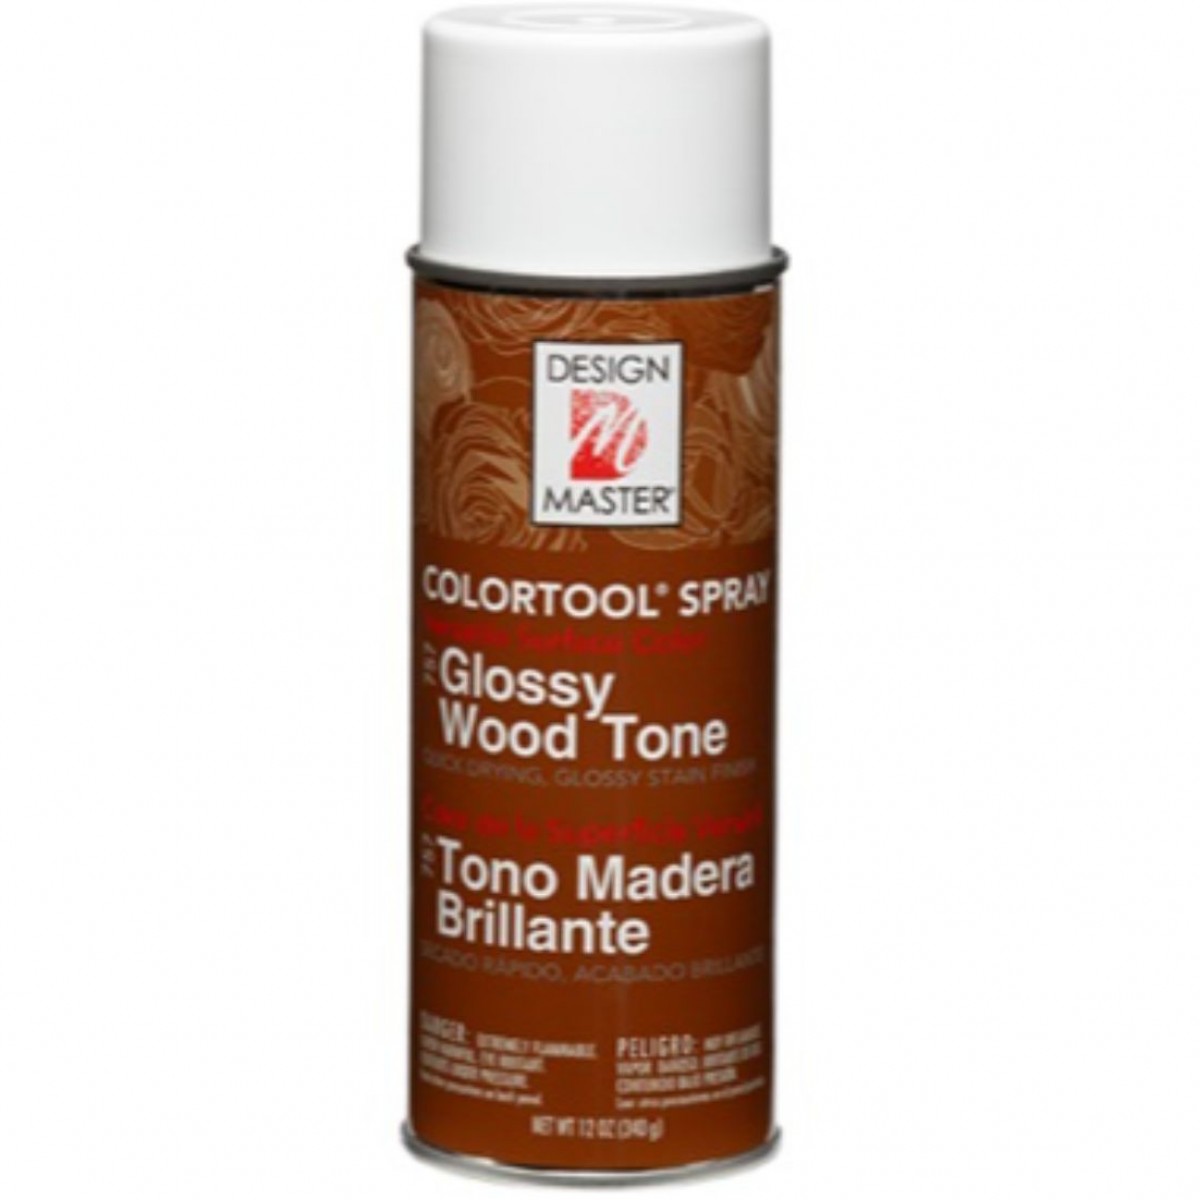 757 Glossy Wood Tone DM Colour Spray Paint - 1 No